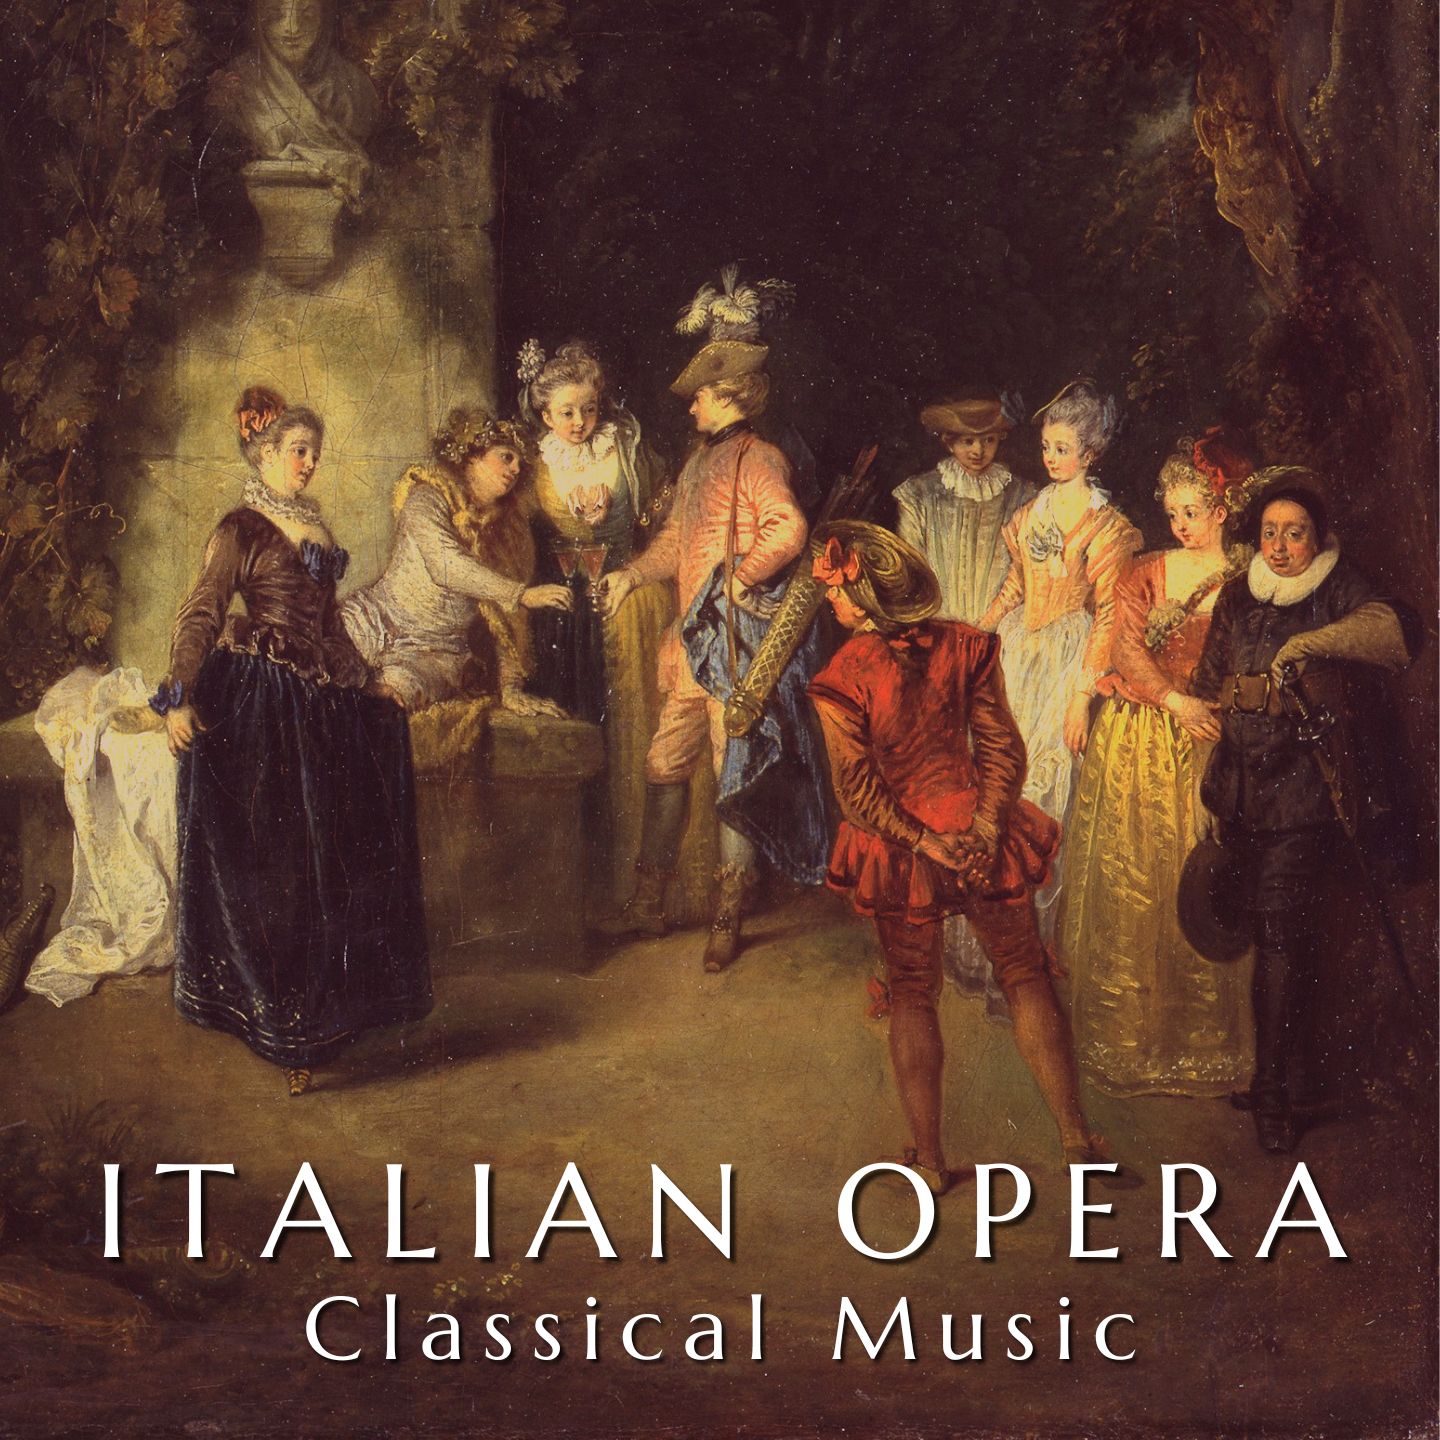 Italian Classical Music - Italian Opera